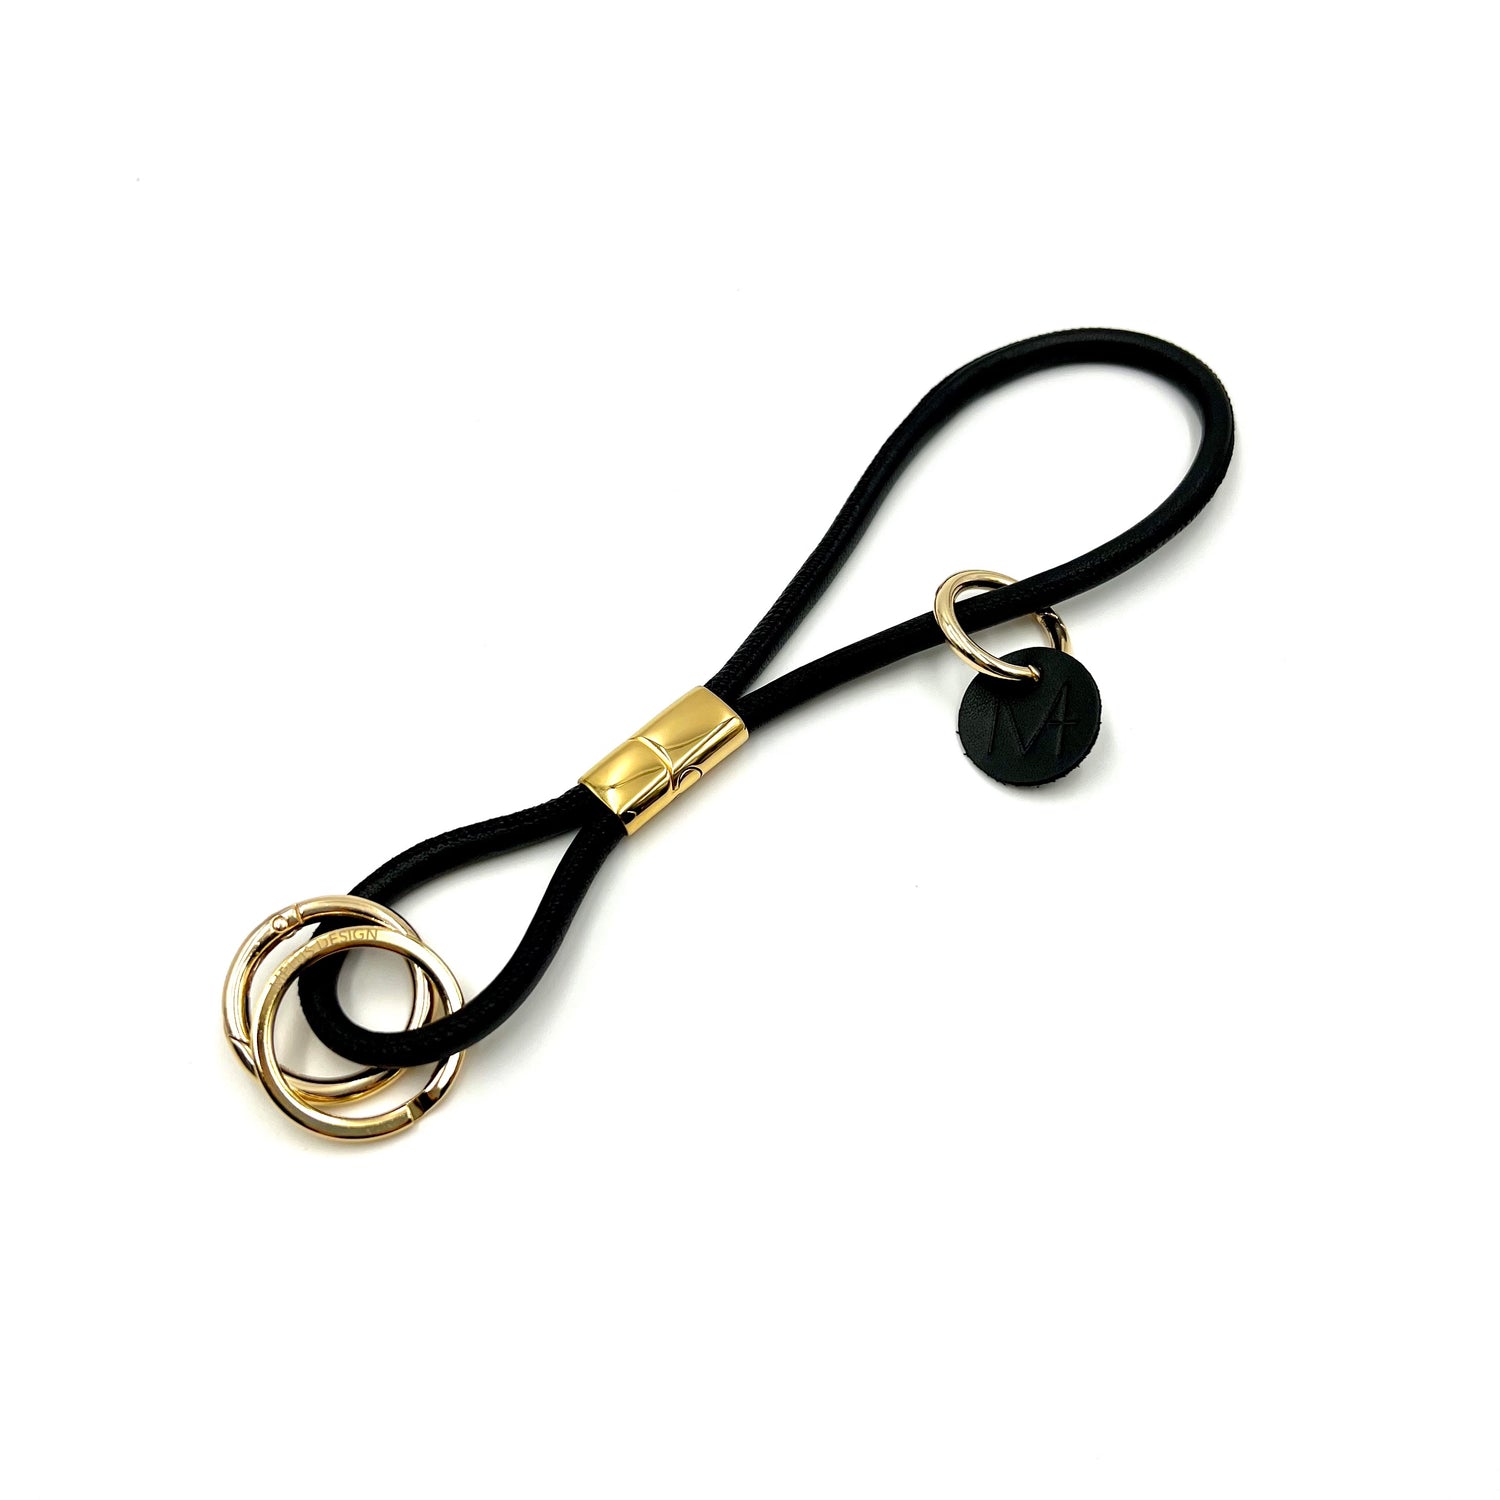 Key Bracelet Schlüsselanhänger Leder teilbar Armband Trageschlaufe Autoschlüssel Schlüssel Accessoire Schwarz Gold